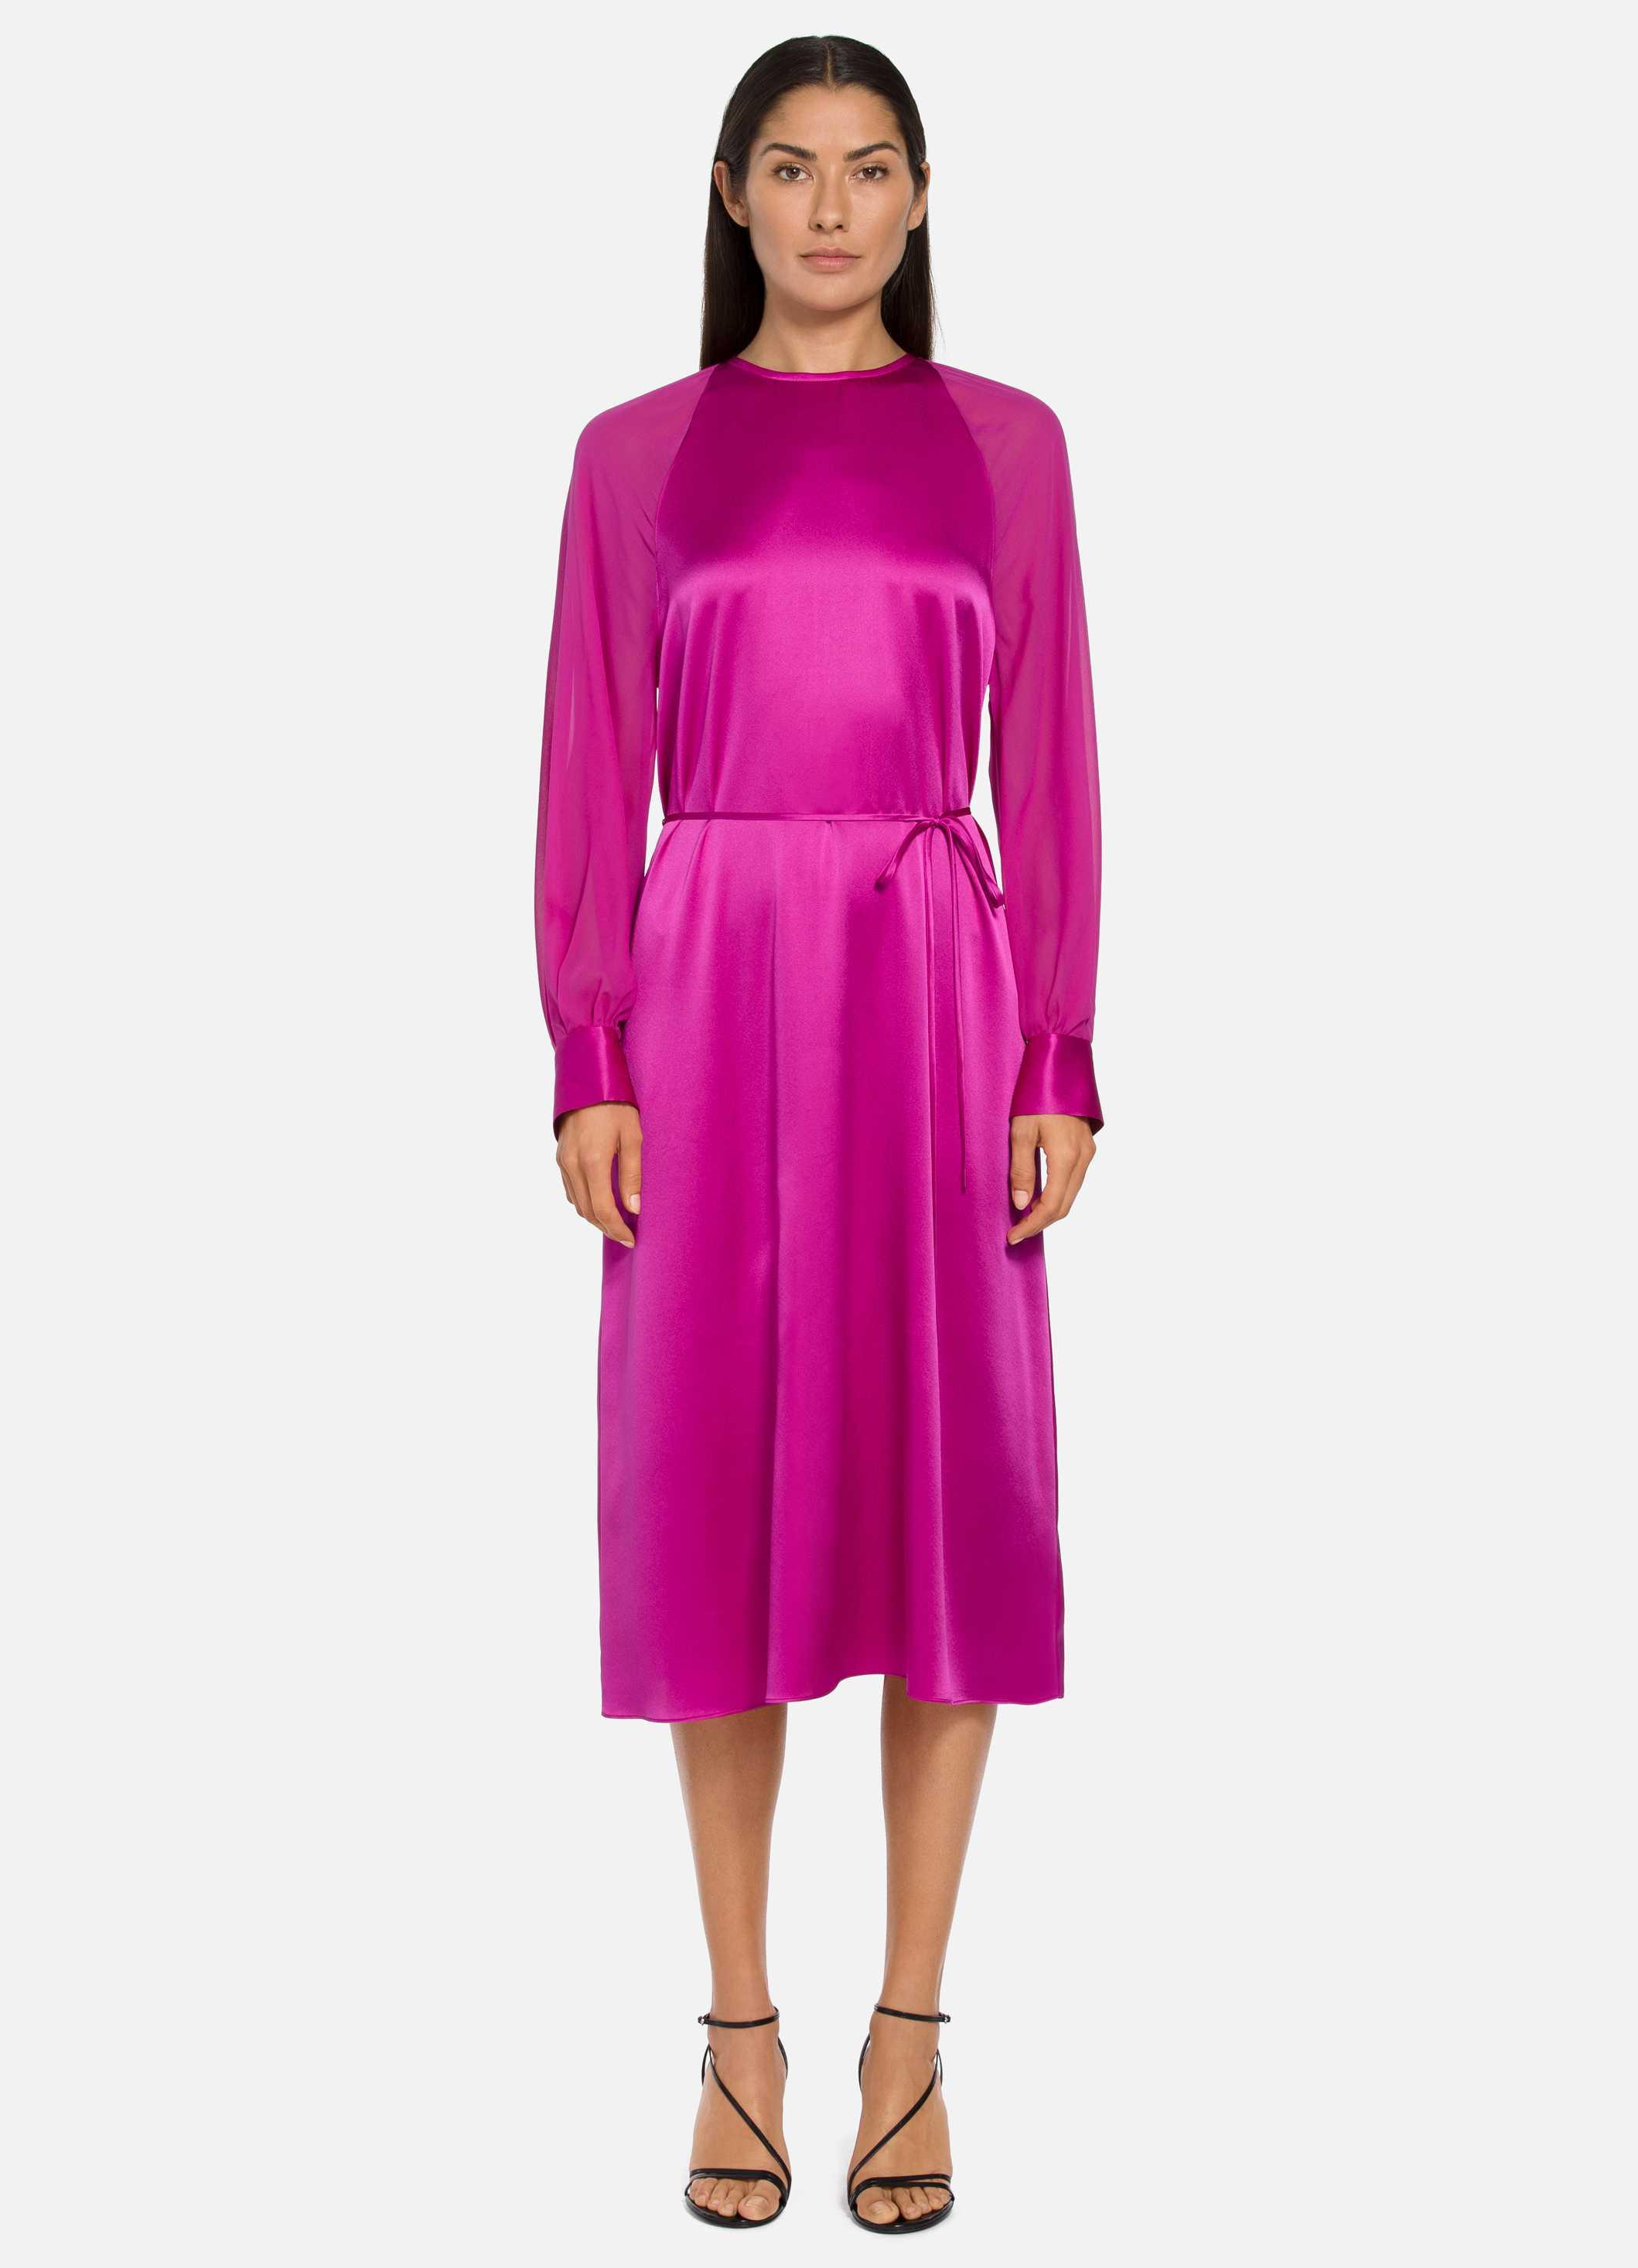 St. John Stretch Silk Charmeuse Dress in Fuschia Rose (Pink) - Save 60% ...